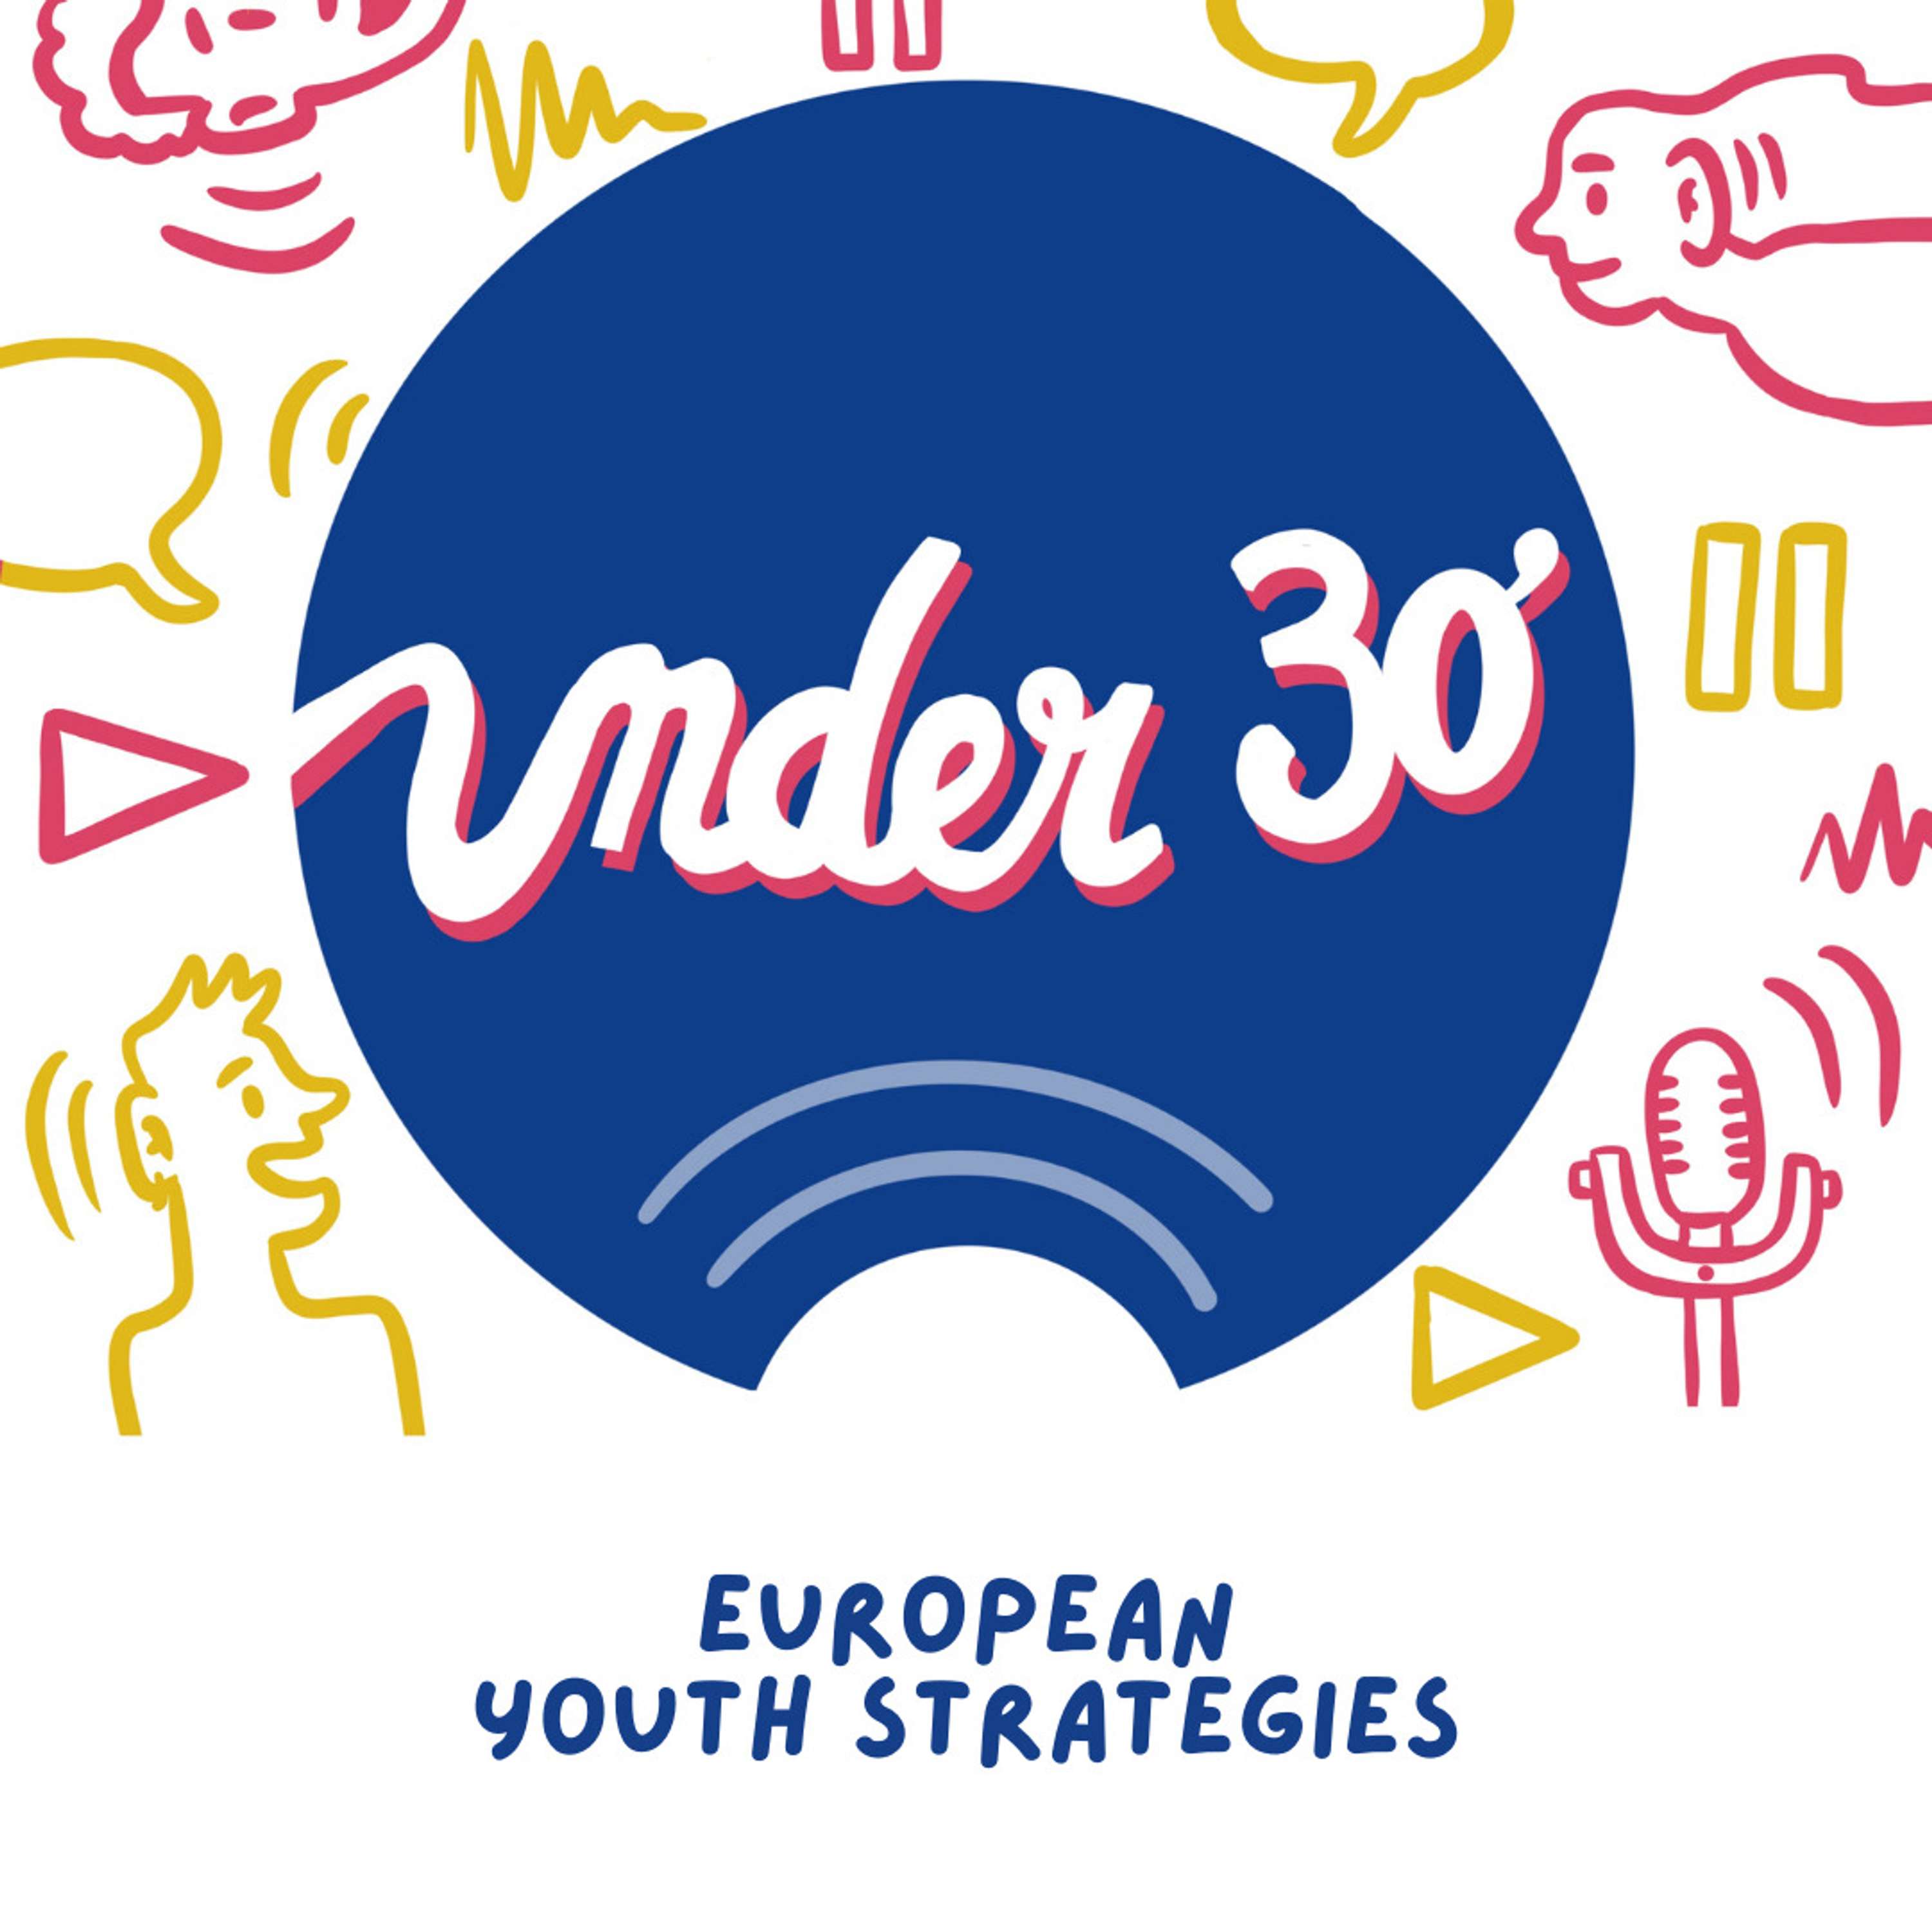 European Youth Strategies